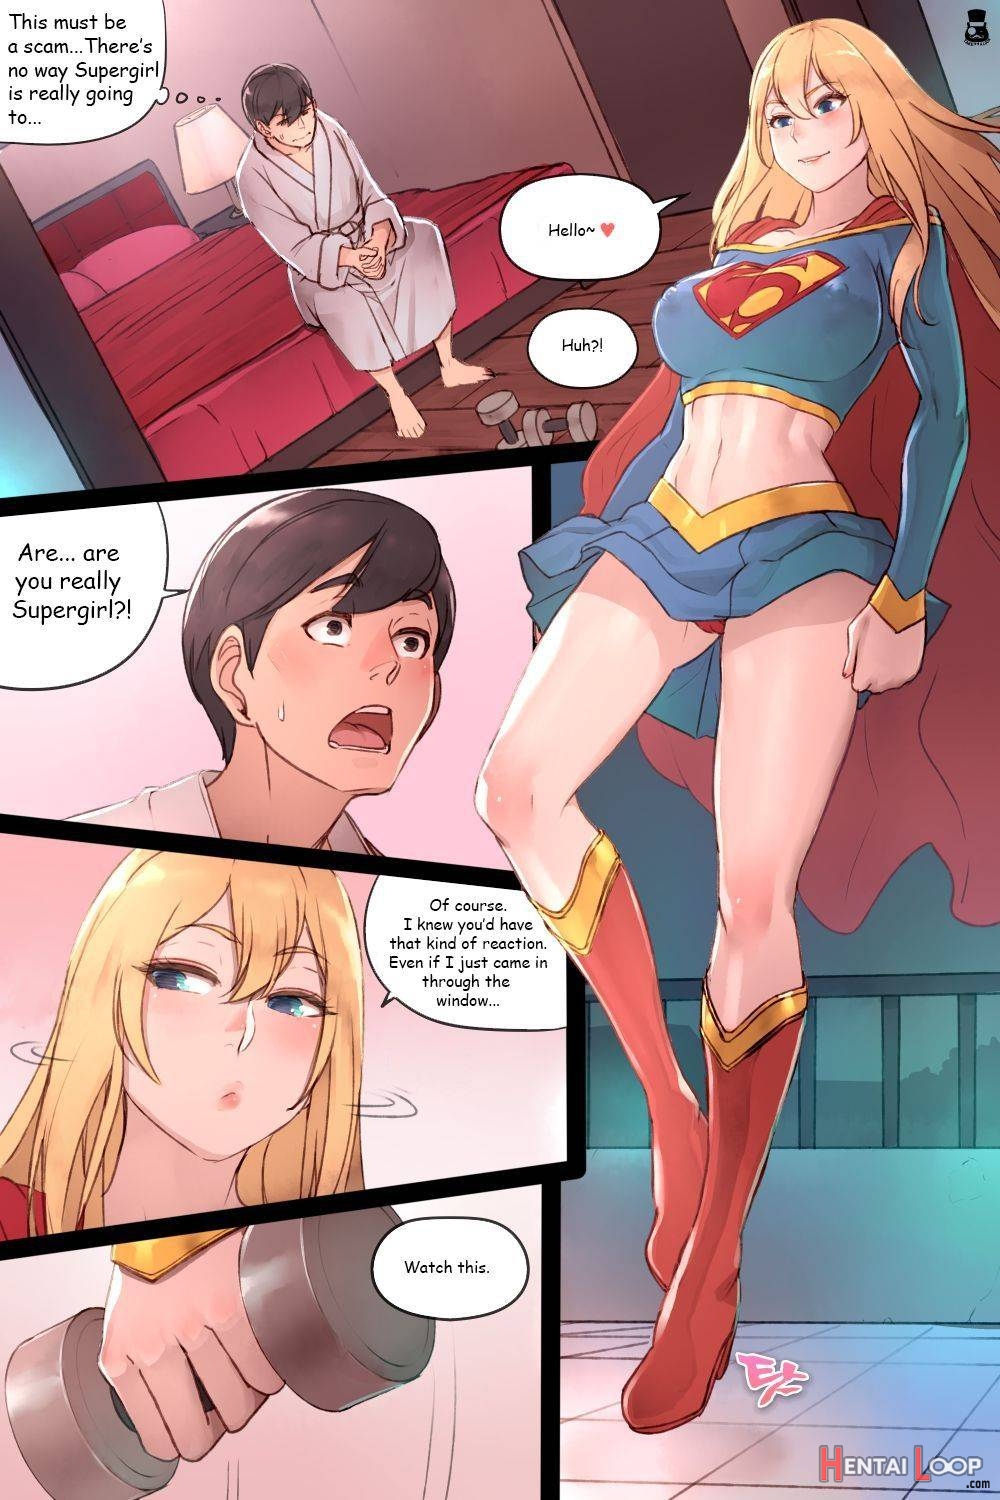 Supergirl hent